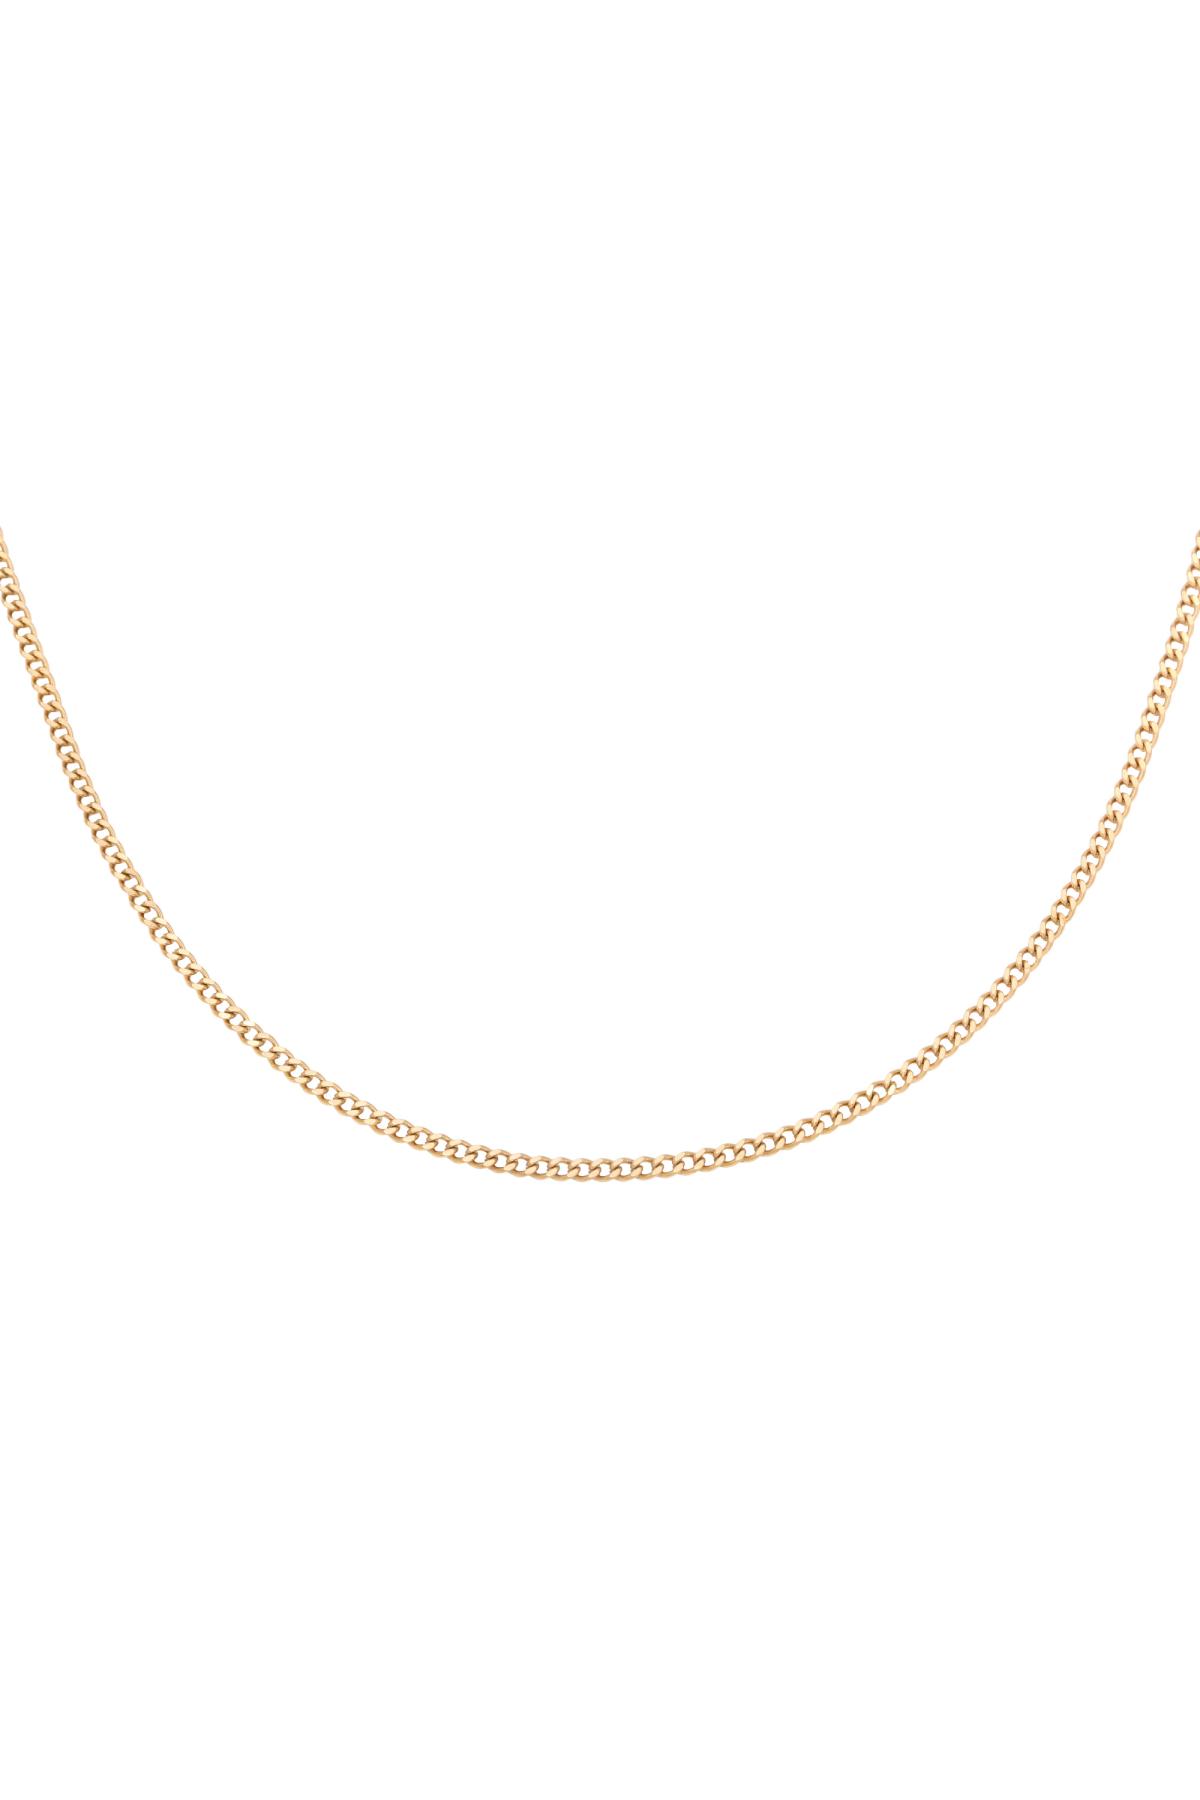 Halskette Tiny Plain Chains Gold Edelstahl